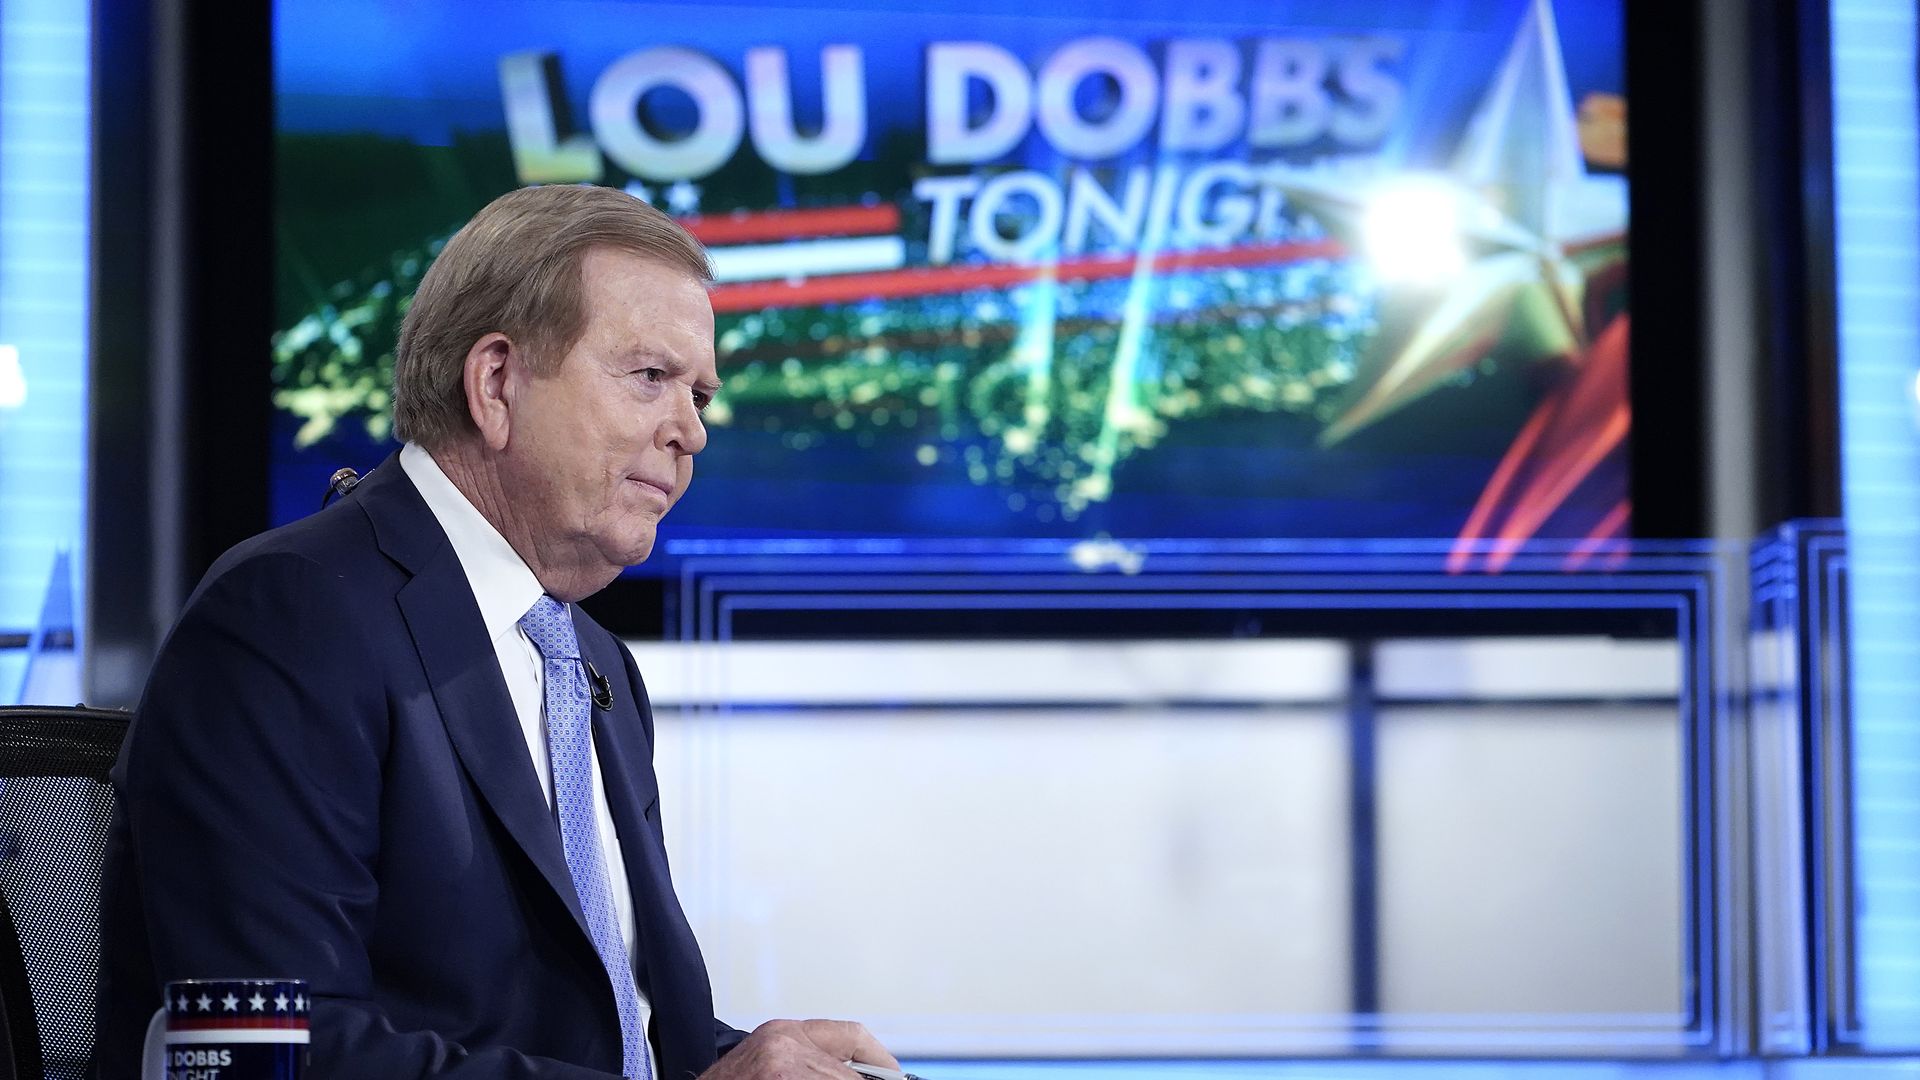 Lou Dobbs on the set of "Lou Dobbs Tonight" in September 2019.